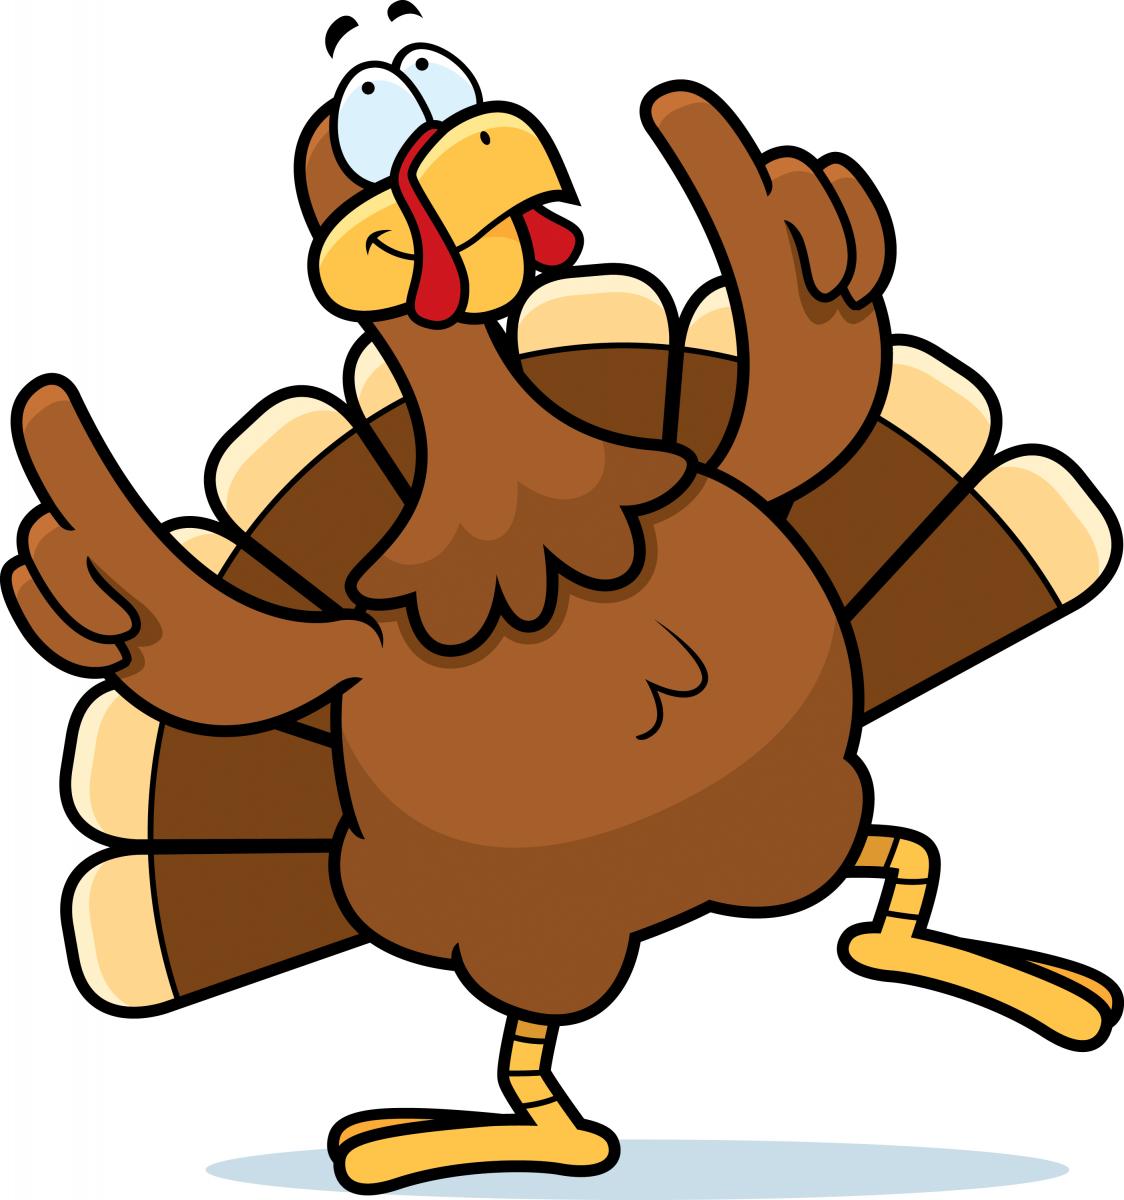 Funny thanksgiving turkey .